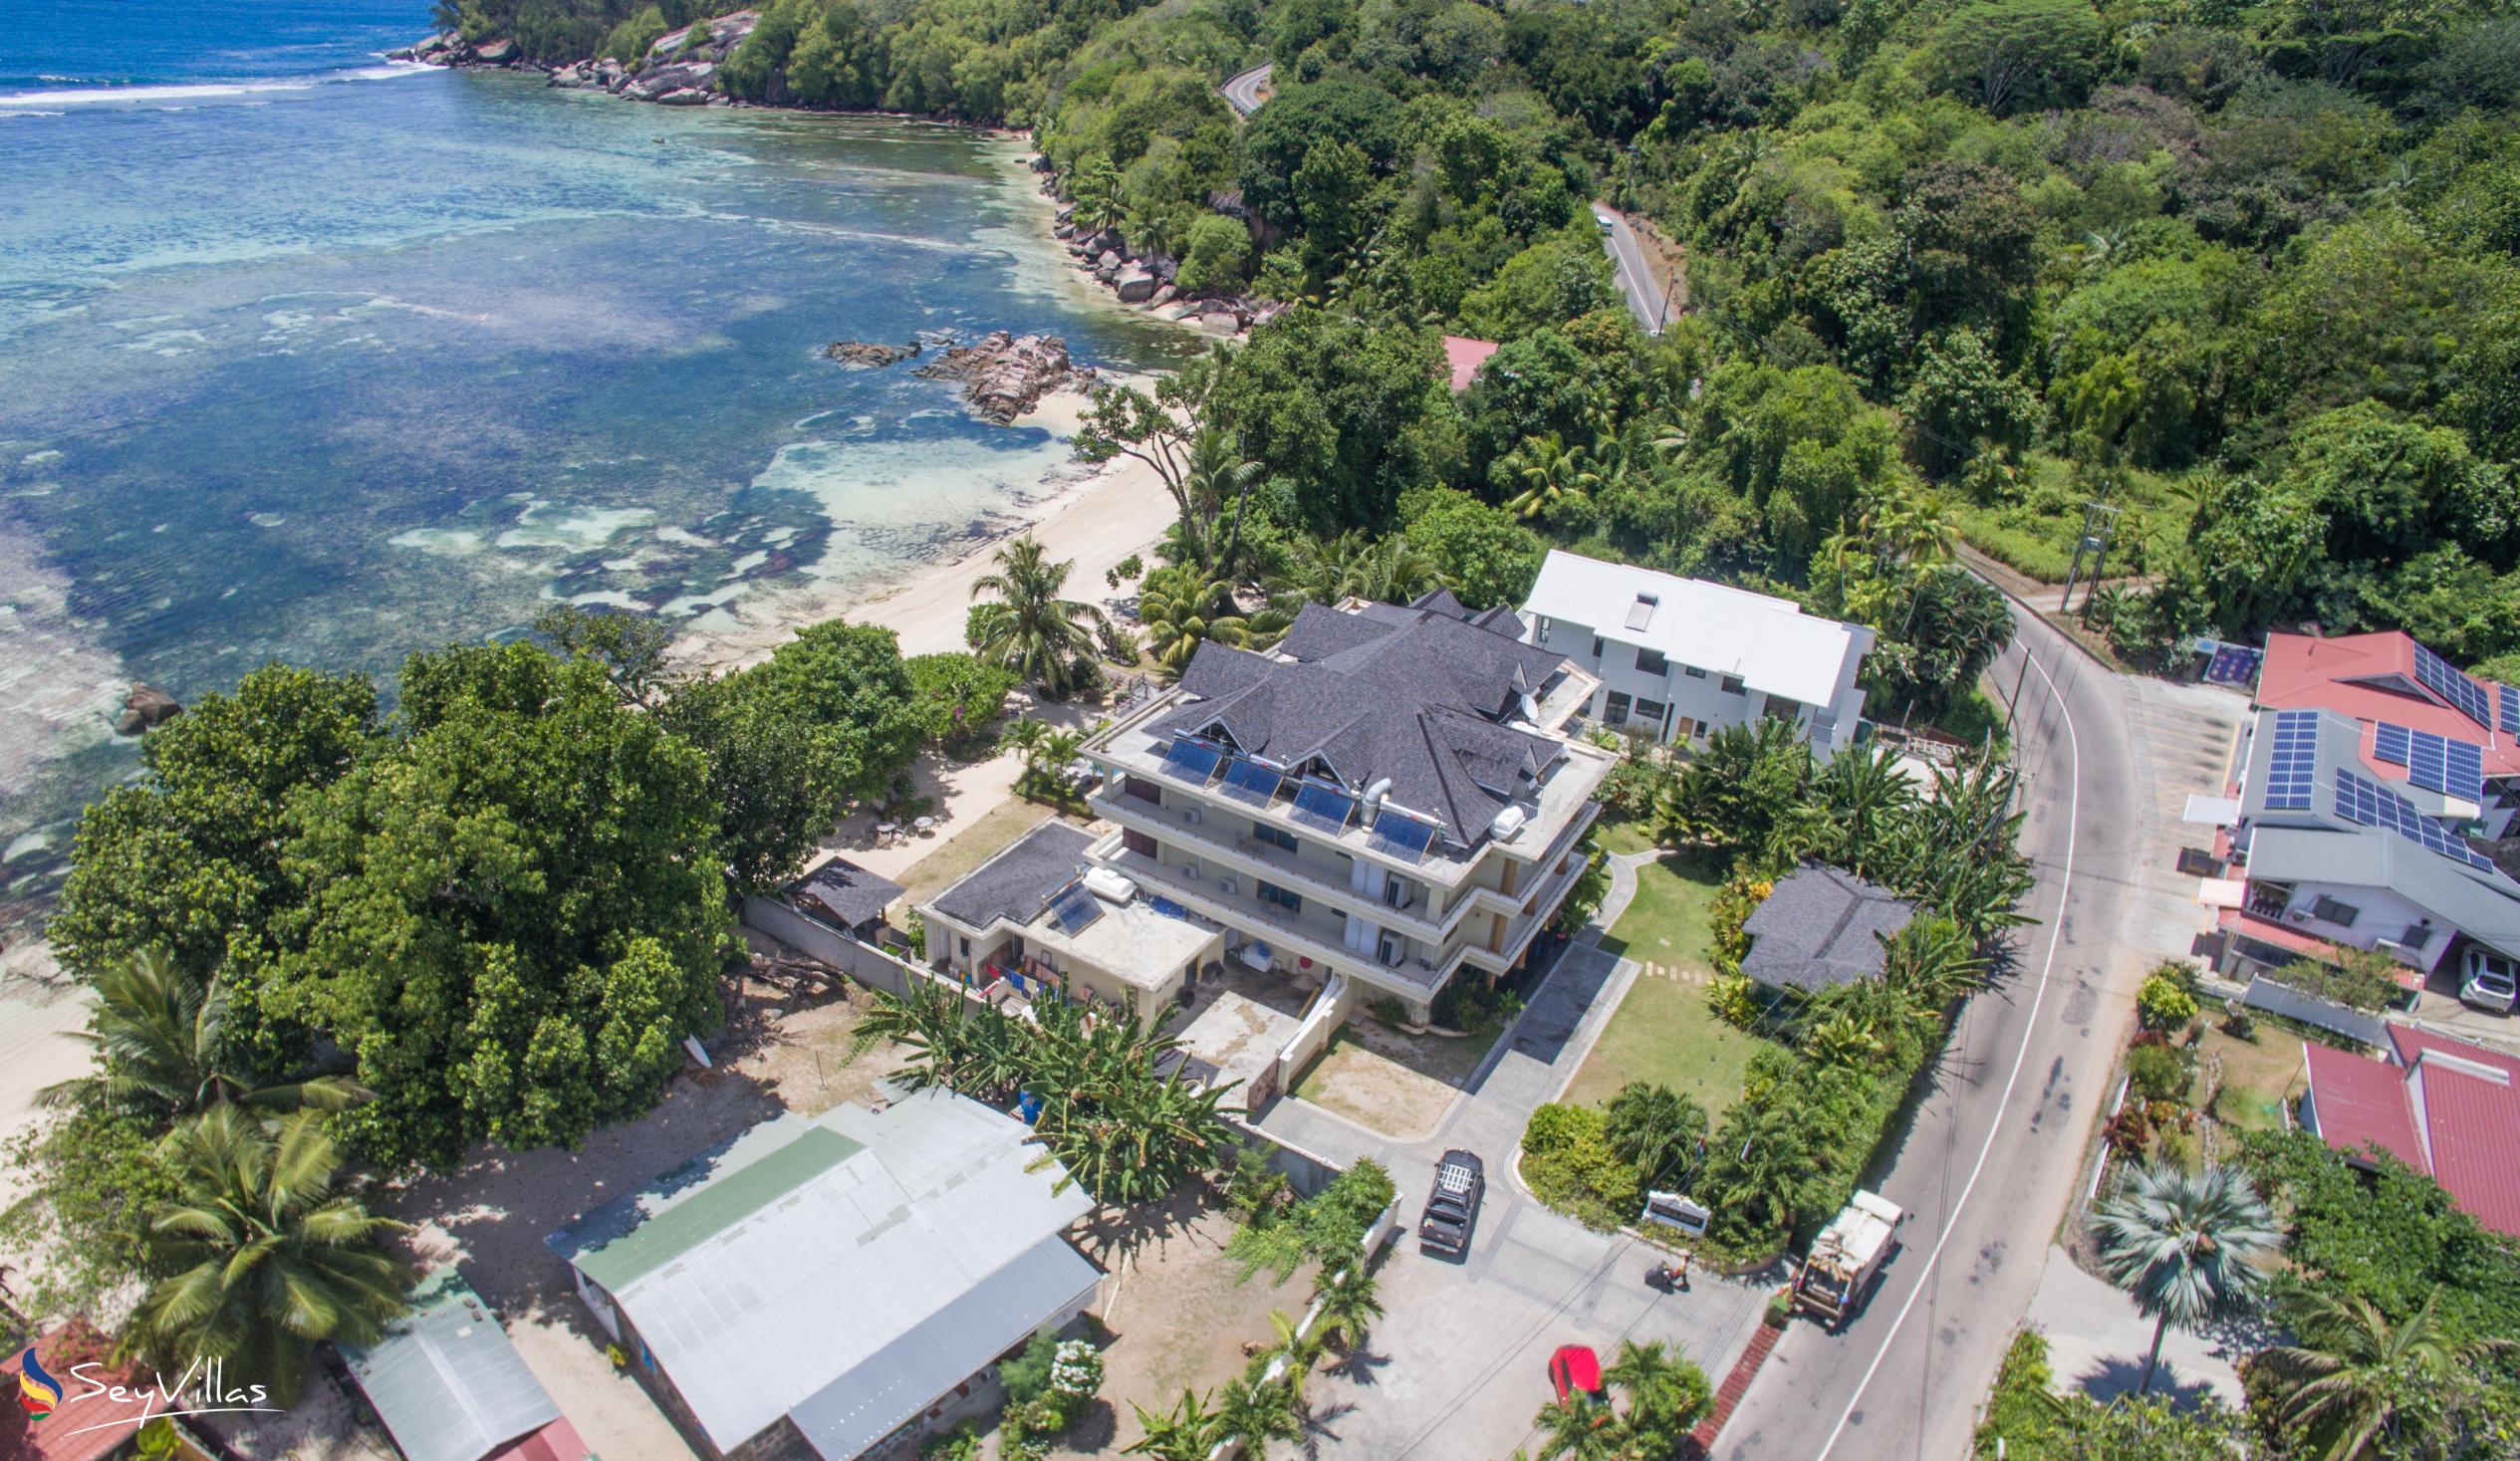 Foto 37: Crown Beach Hotel - Location - Mahé (Seychelles)